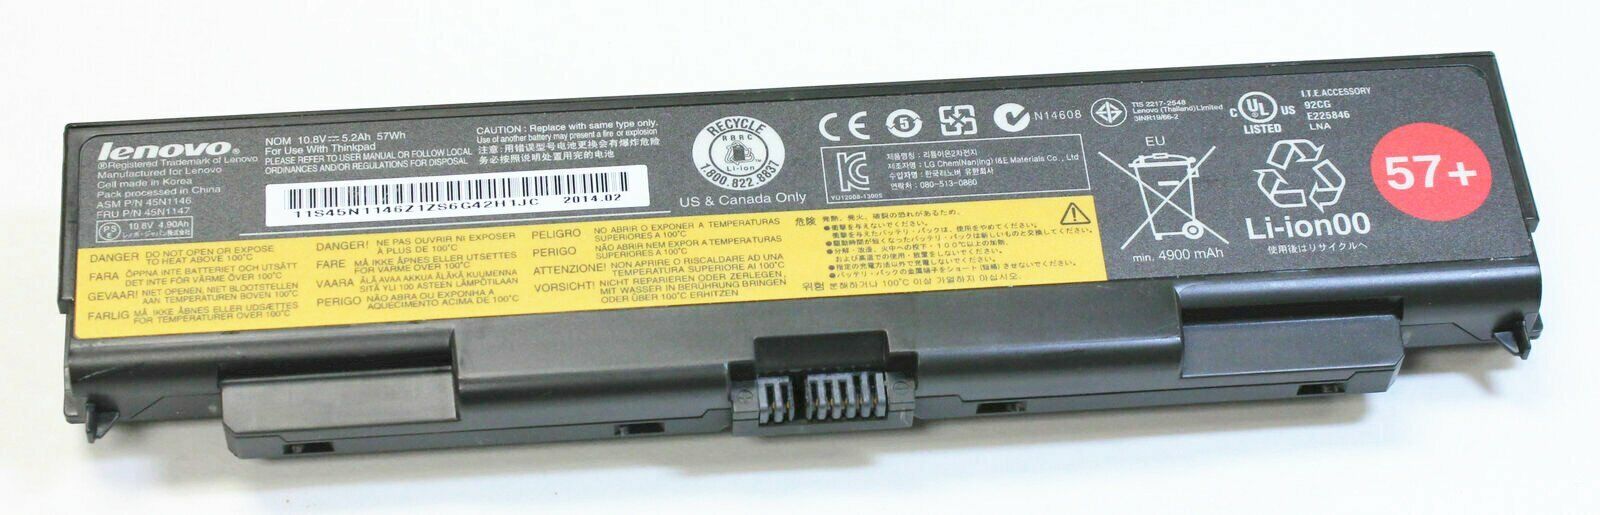 57+ Genuine Lenovo T440 T440p Battery W541 L440 L540 45N1152 45N1153 0C52864